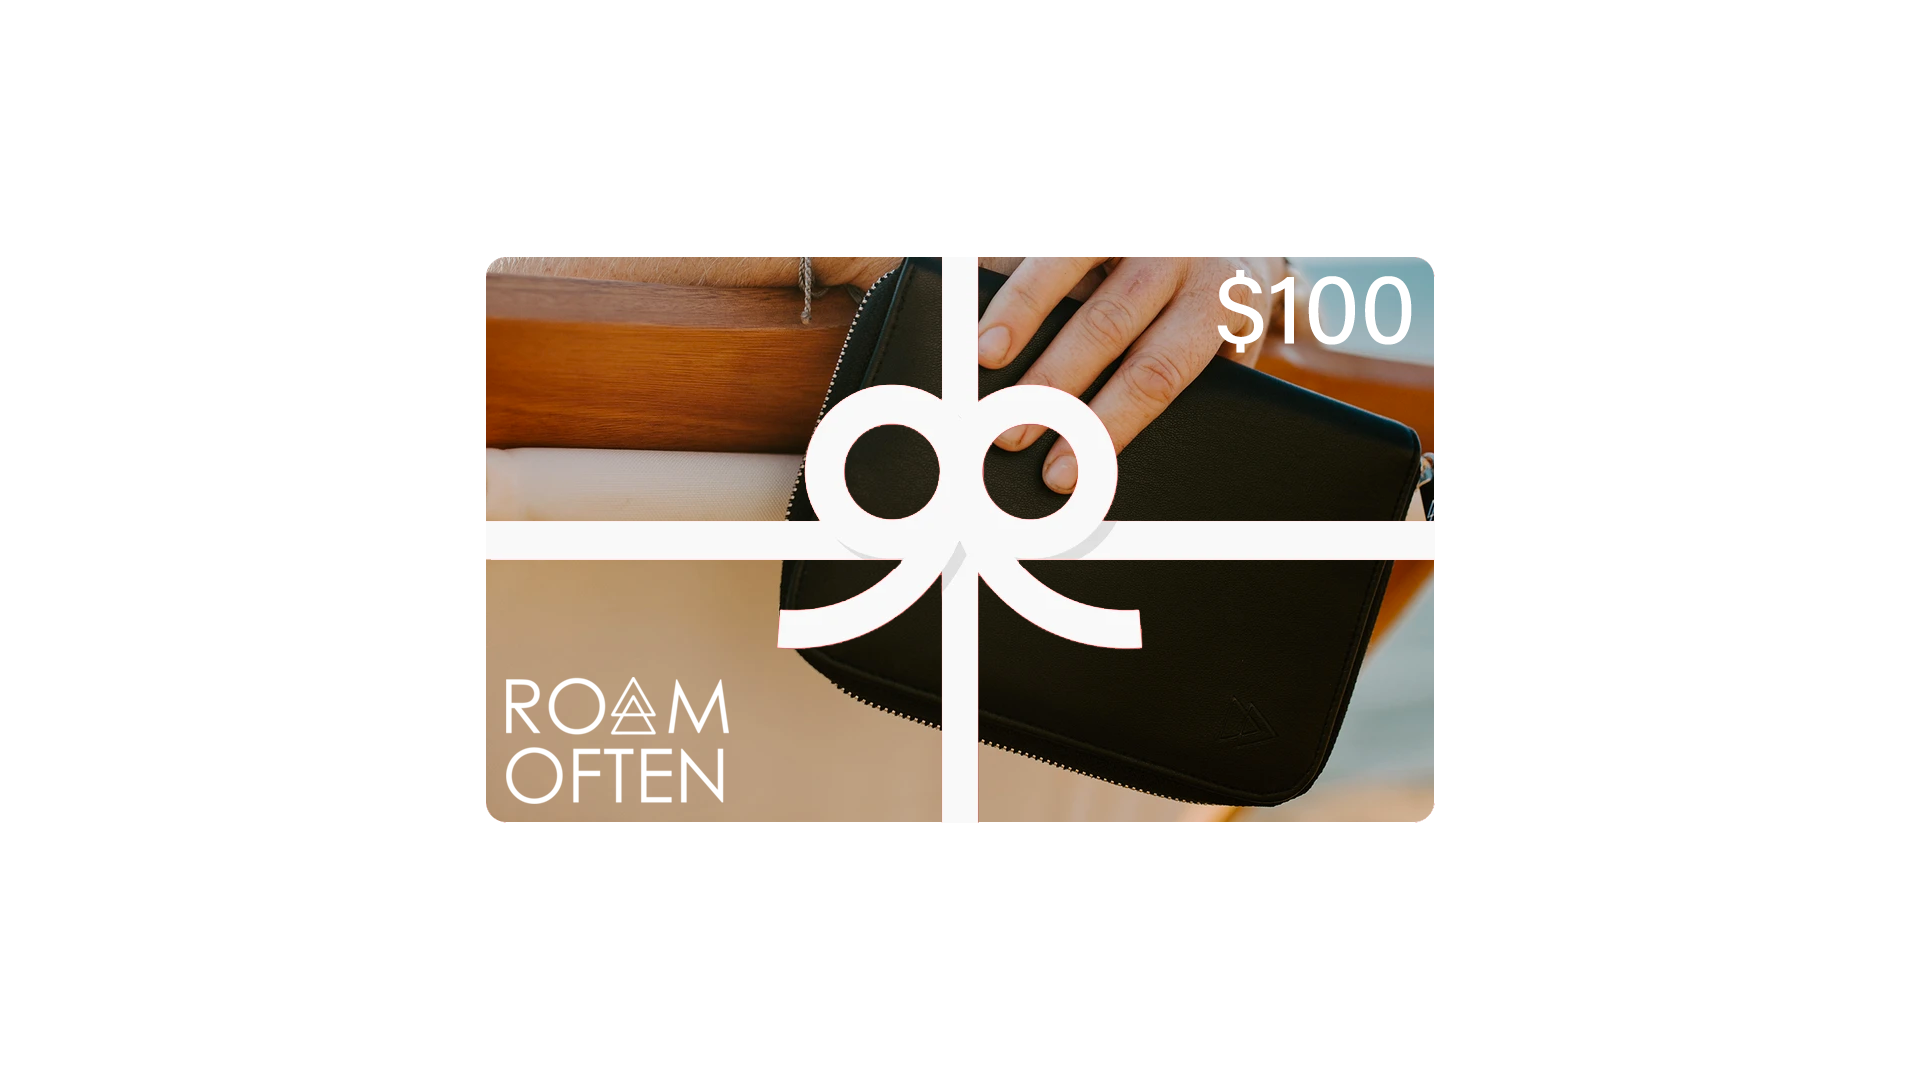 $100 Roam Often giftcard